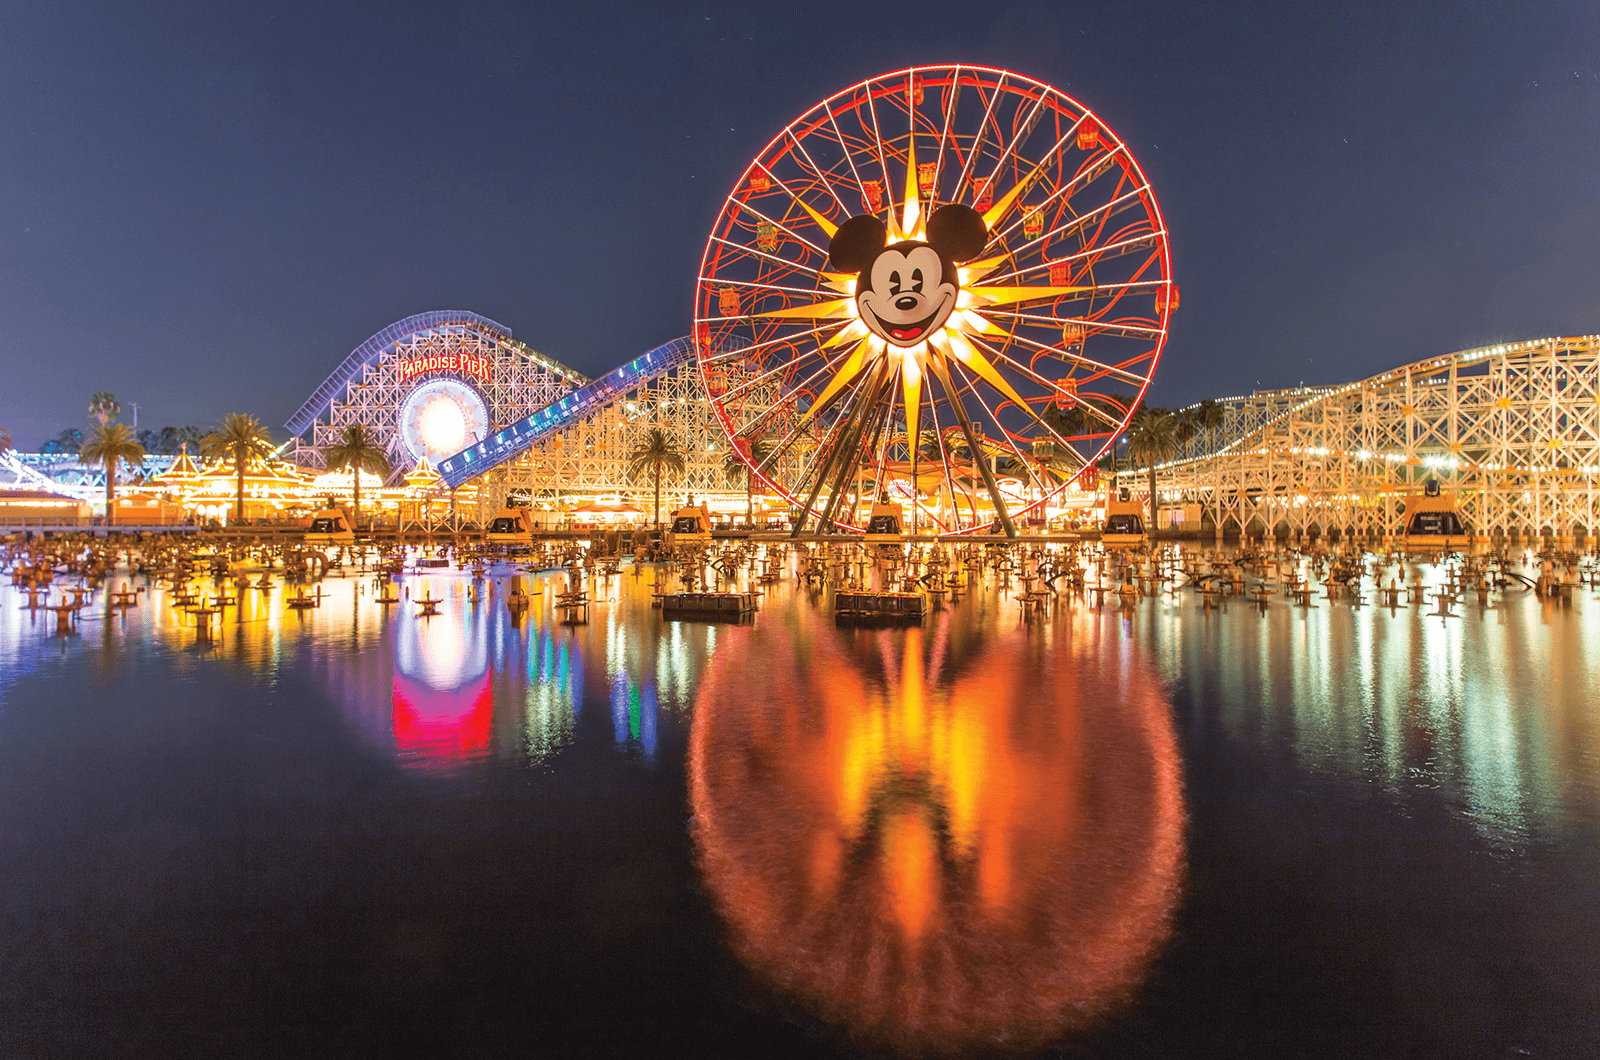 Image of Disneyland theme park rides